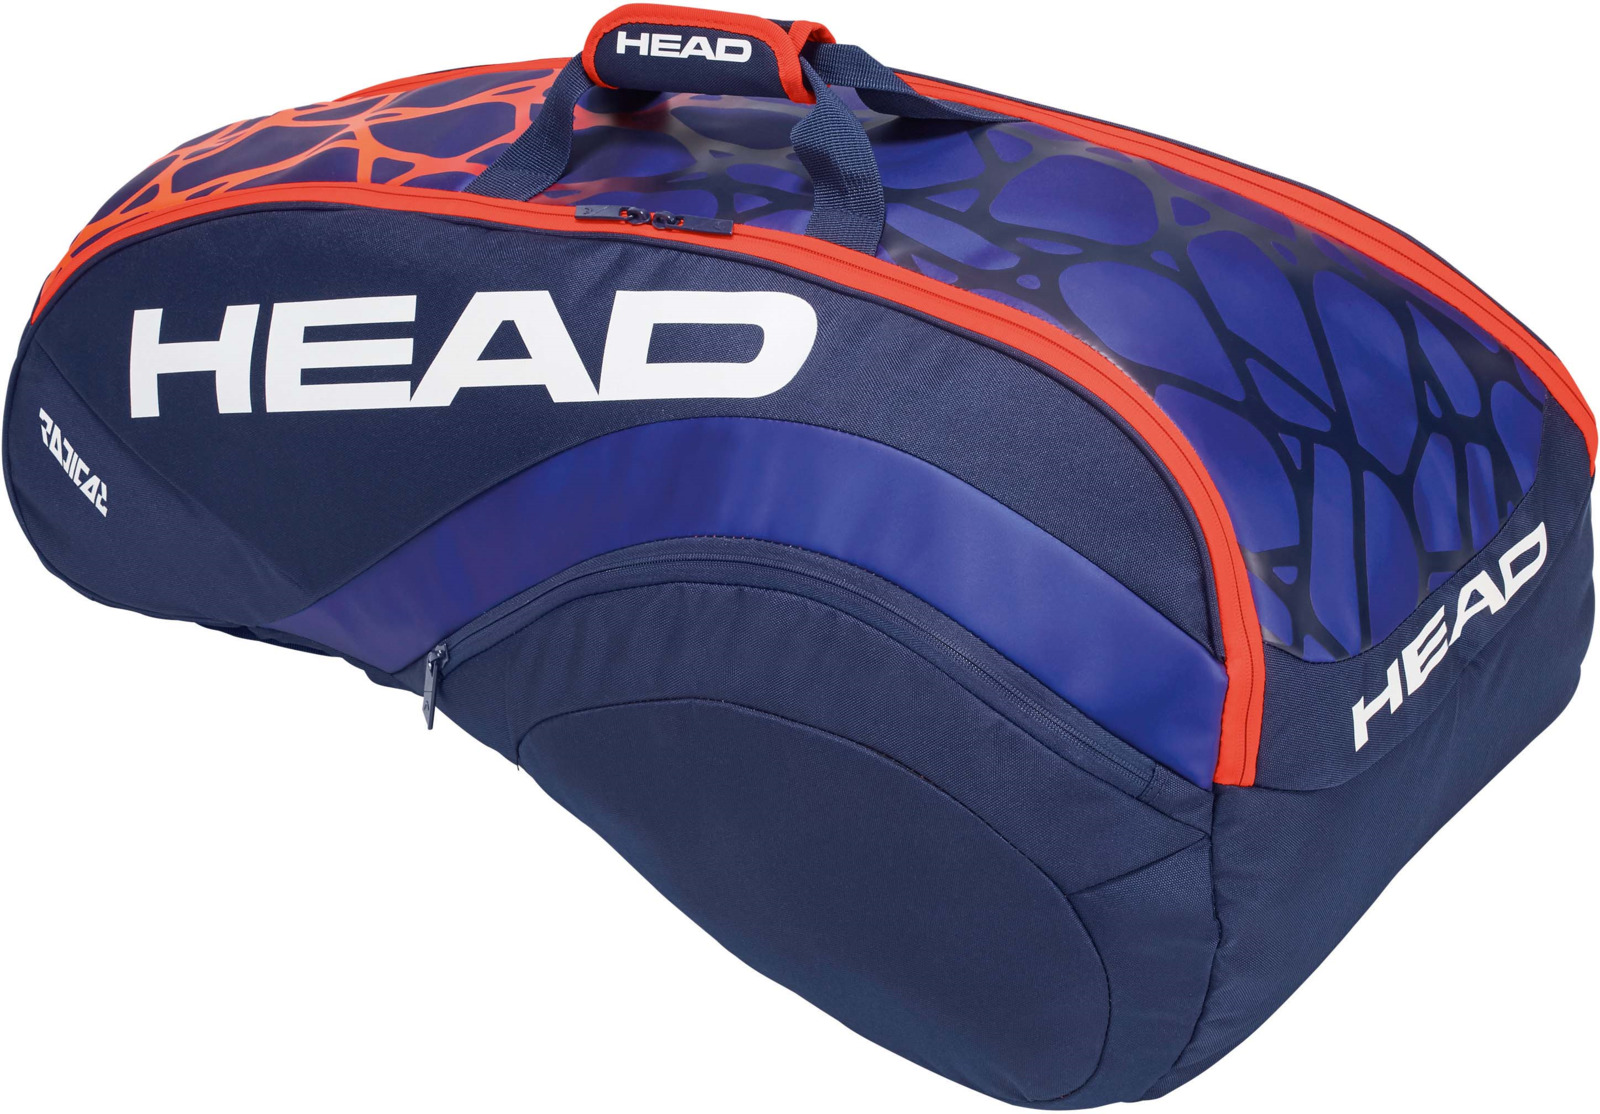 Сумка теннисная Head Radical 9R Supercombi, синий, оранжевый